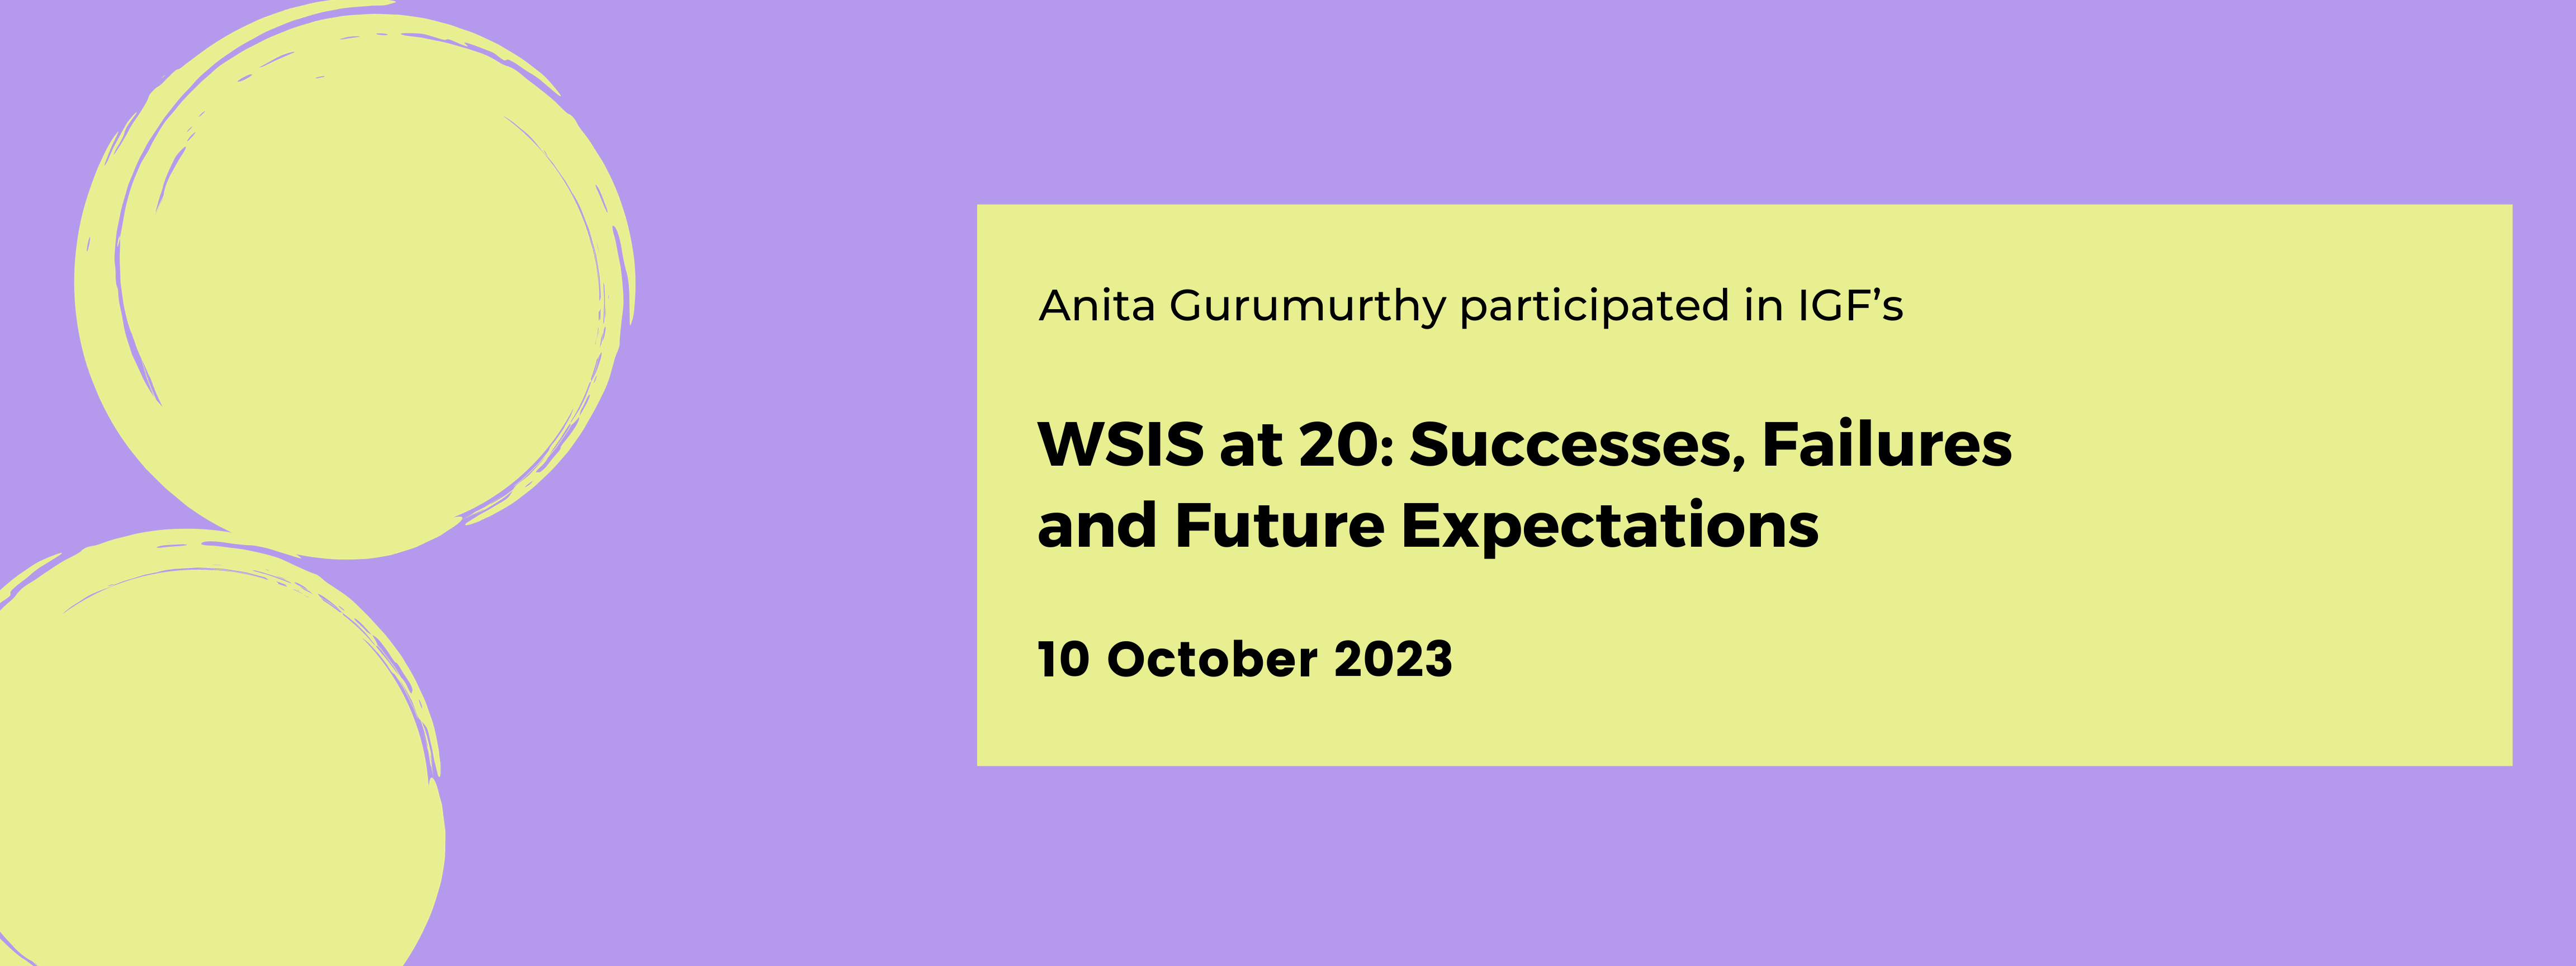 IGF 2023: WSIS at 20: Successes, Failures and Future Expectations